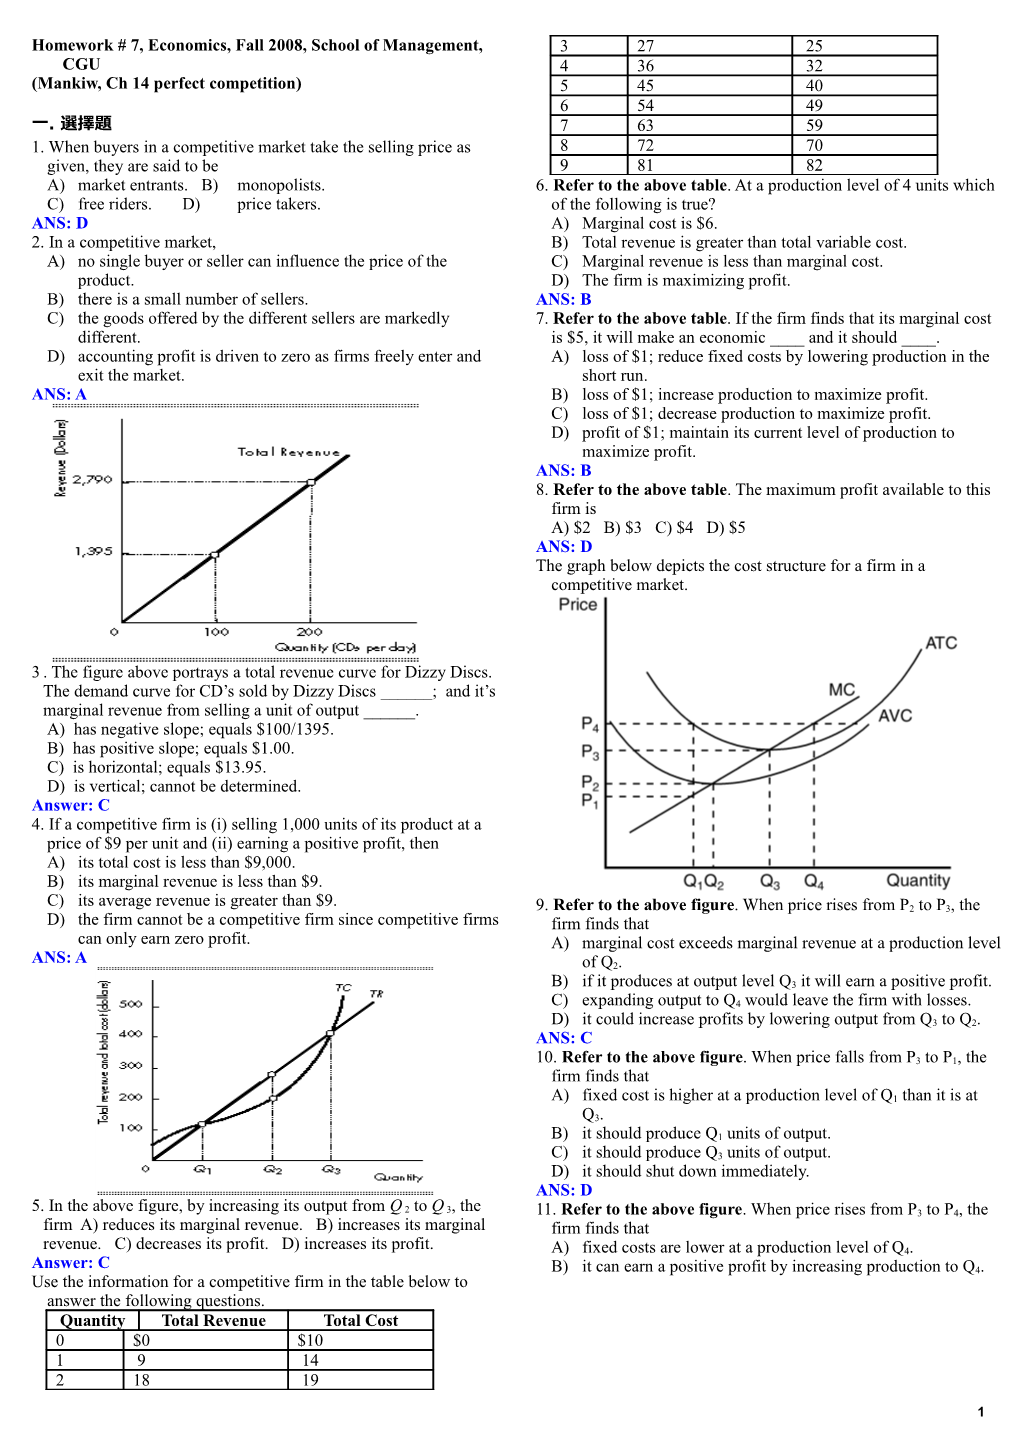 Homework # 7, Economics, Fall 2008, School of Management, CGU